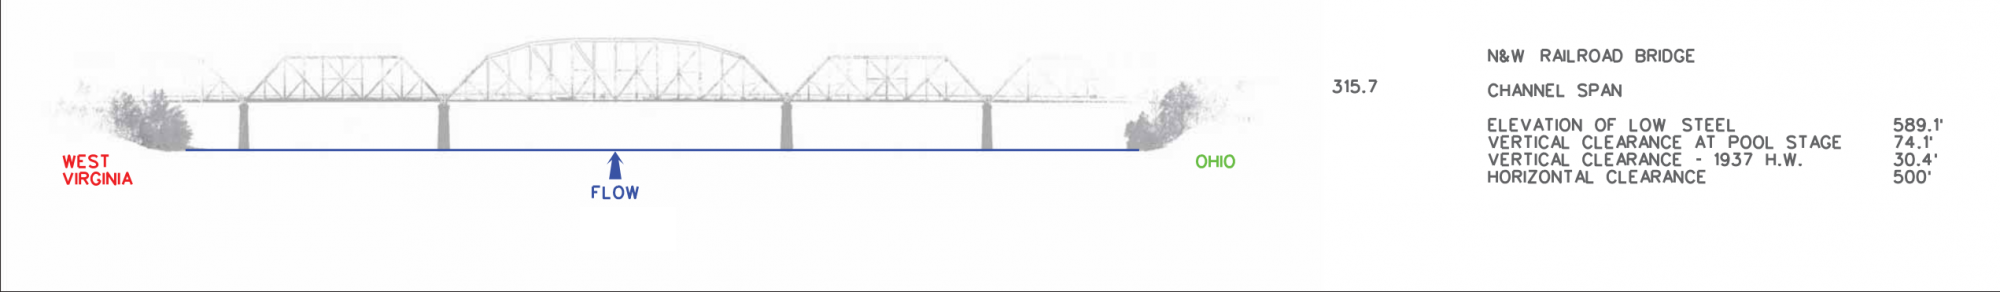 N & W R.R. Bridge Clearances | Bridge Calculator LLC